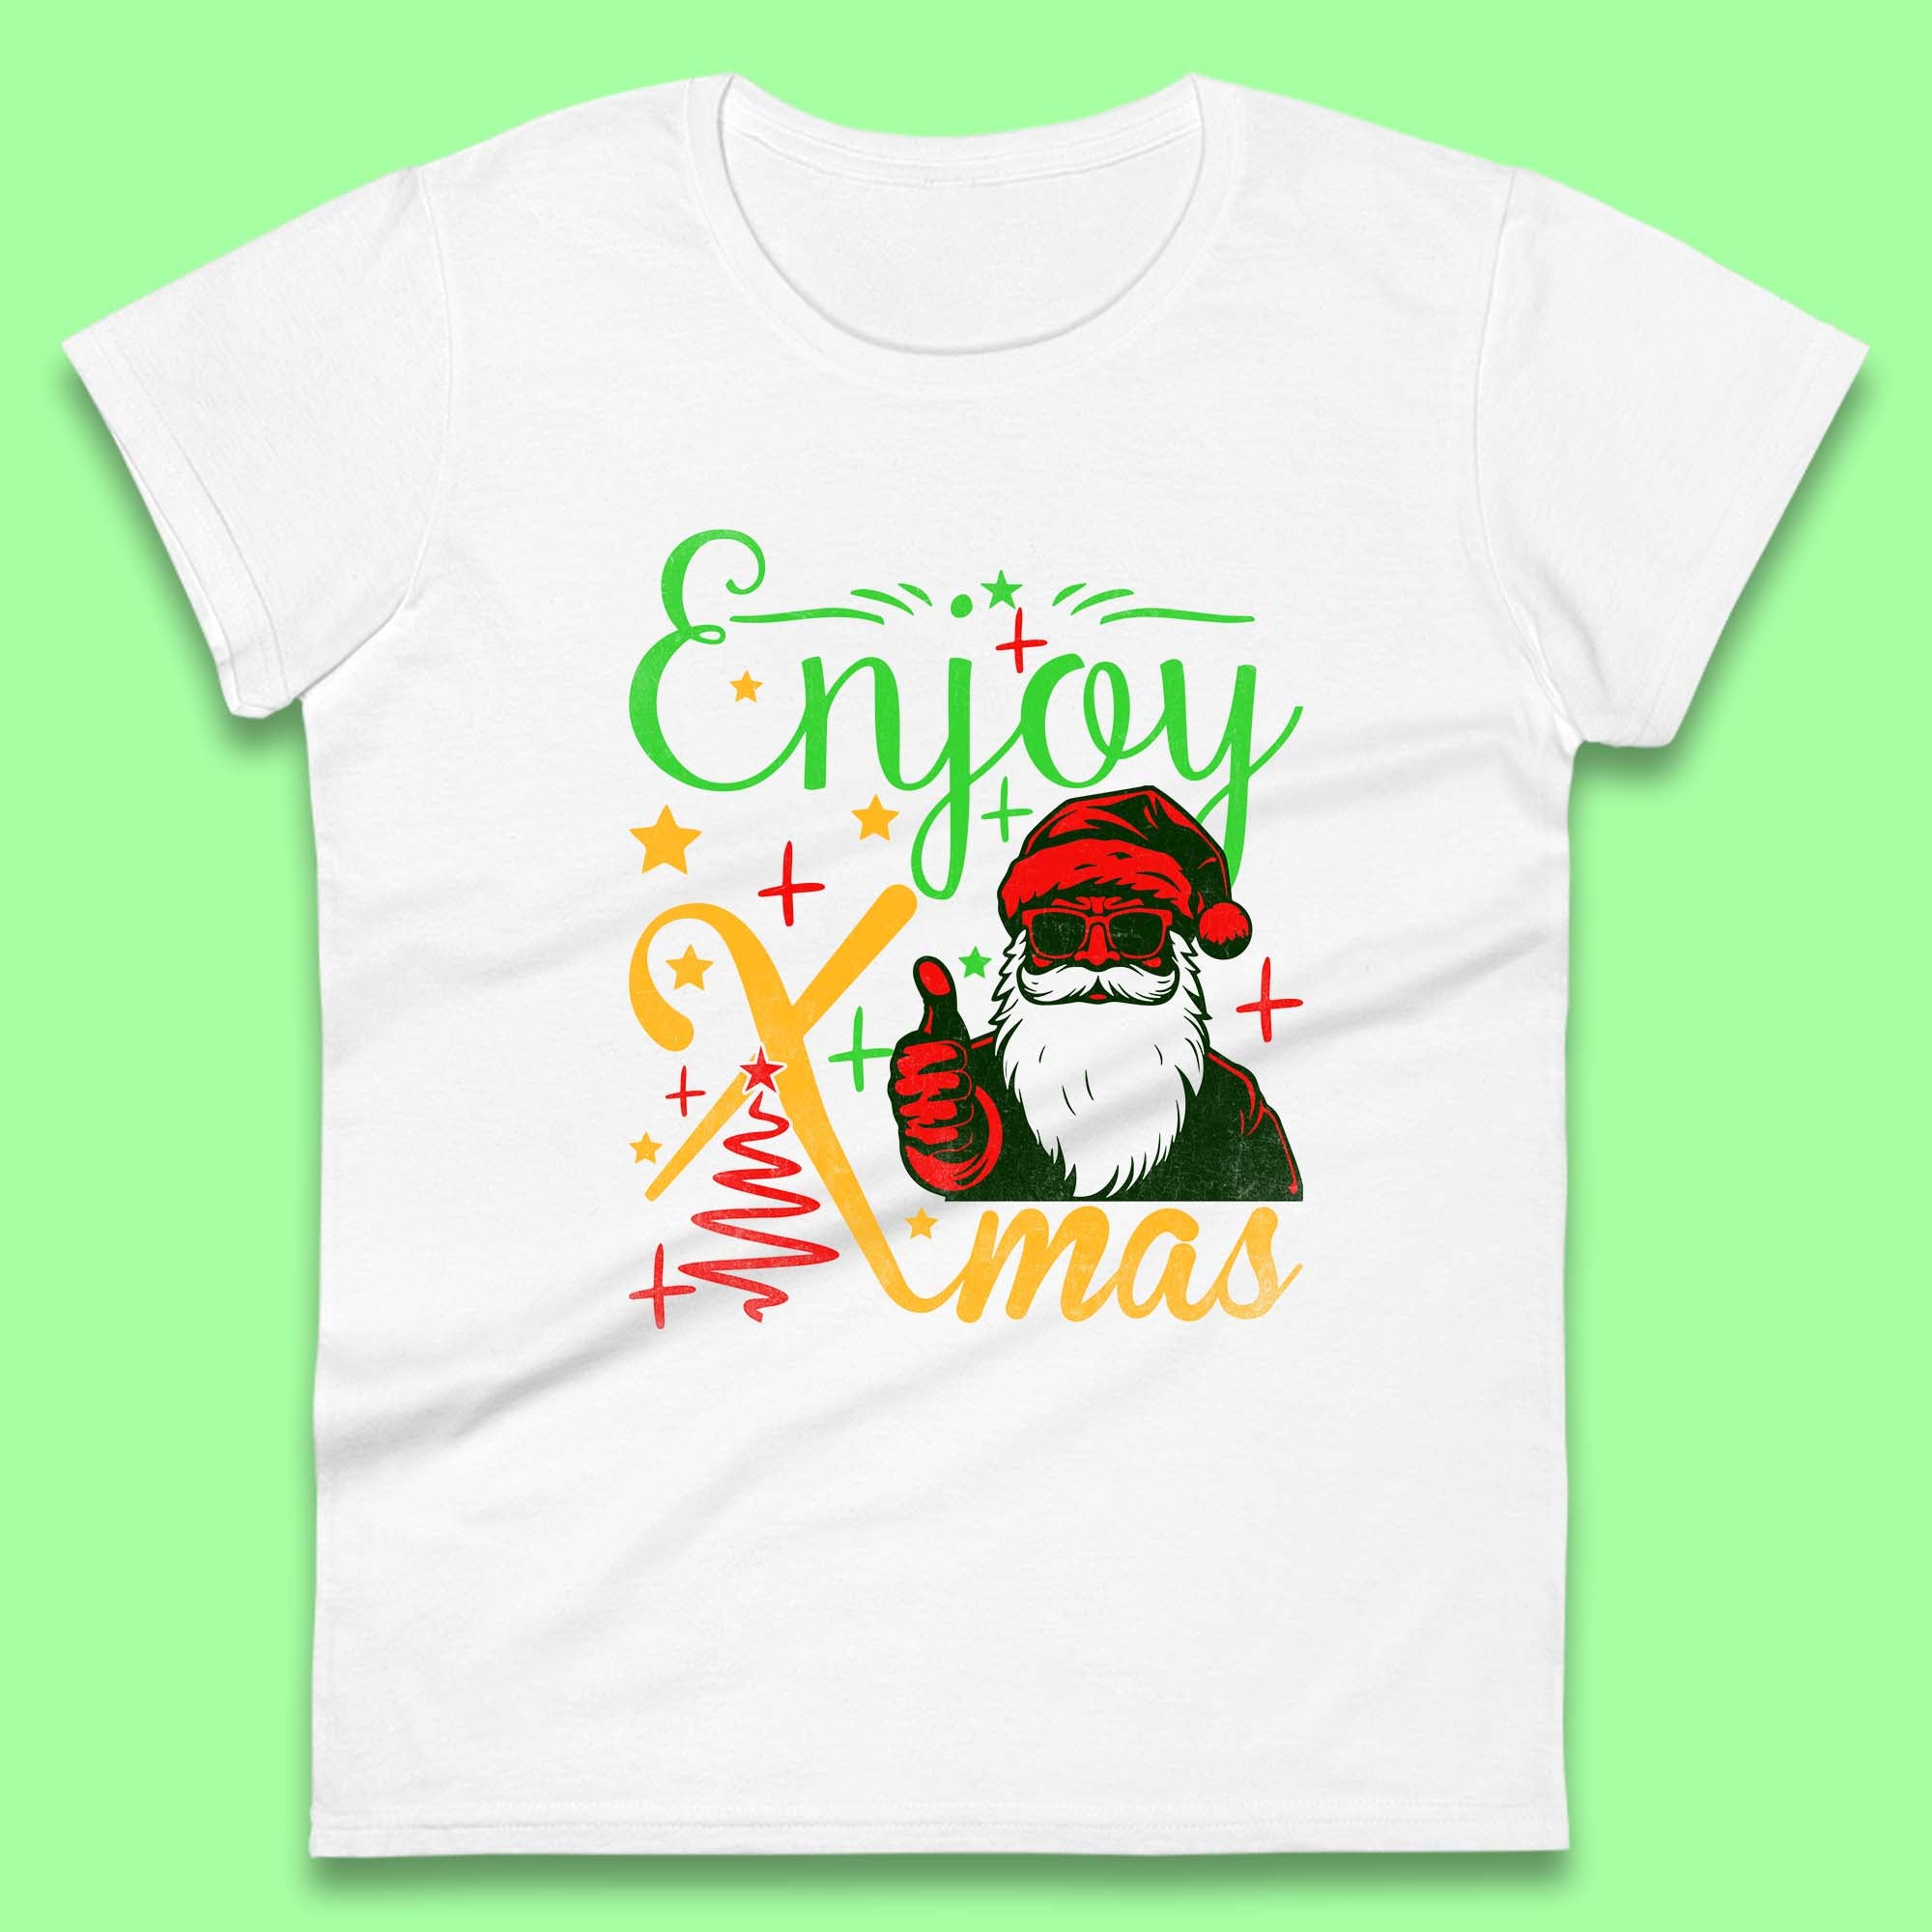 Enjoy Xmas Santa Claus Thumbs Up Merry Christmas Holiday Season Womens Tee Top